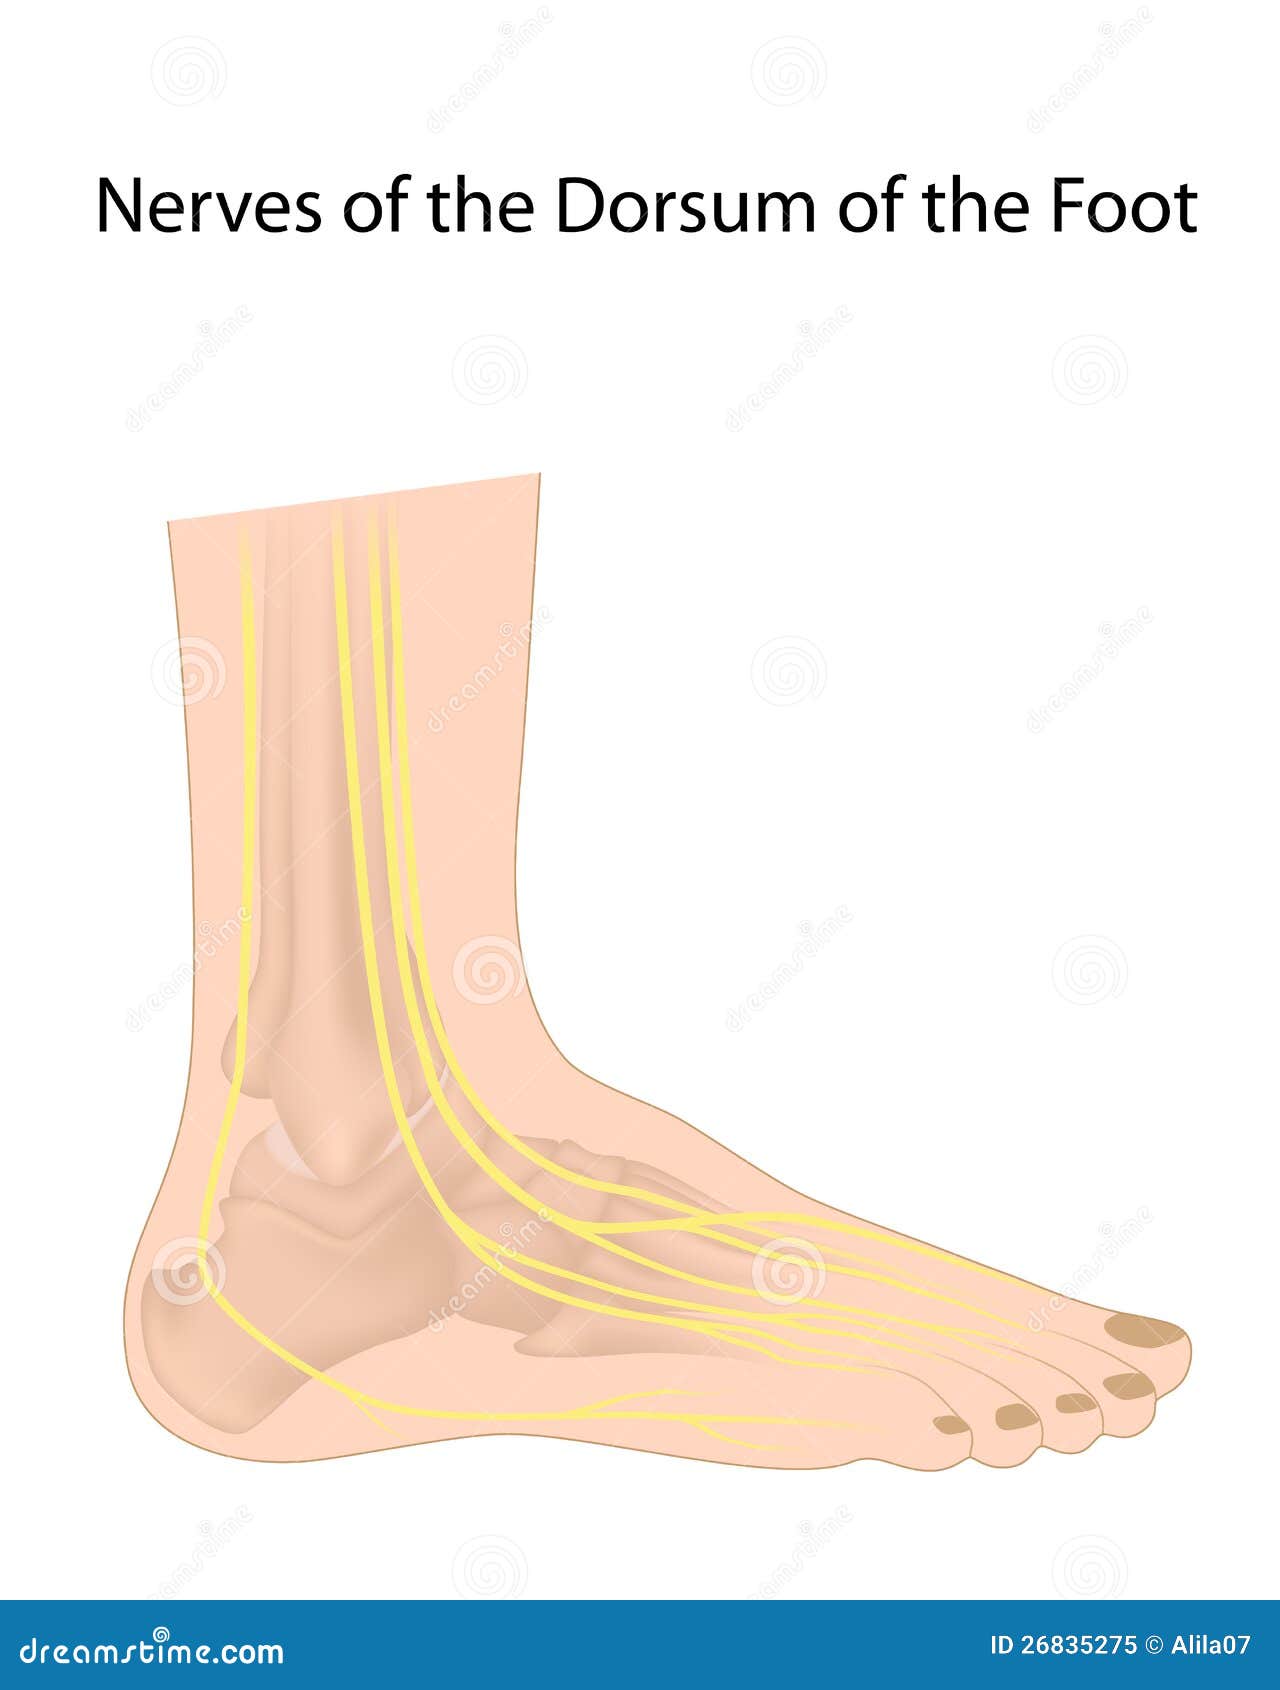 Dorsal Digital Nerves Of Foot Royalty Free Stock Photo - Image: 26835275